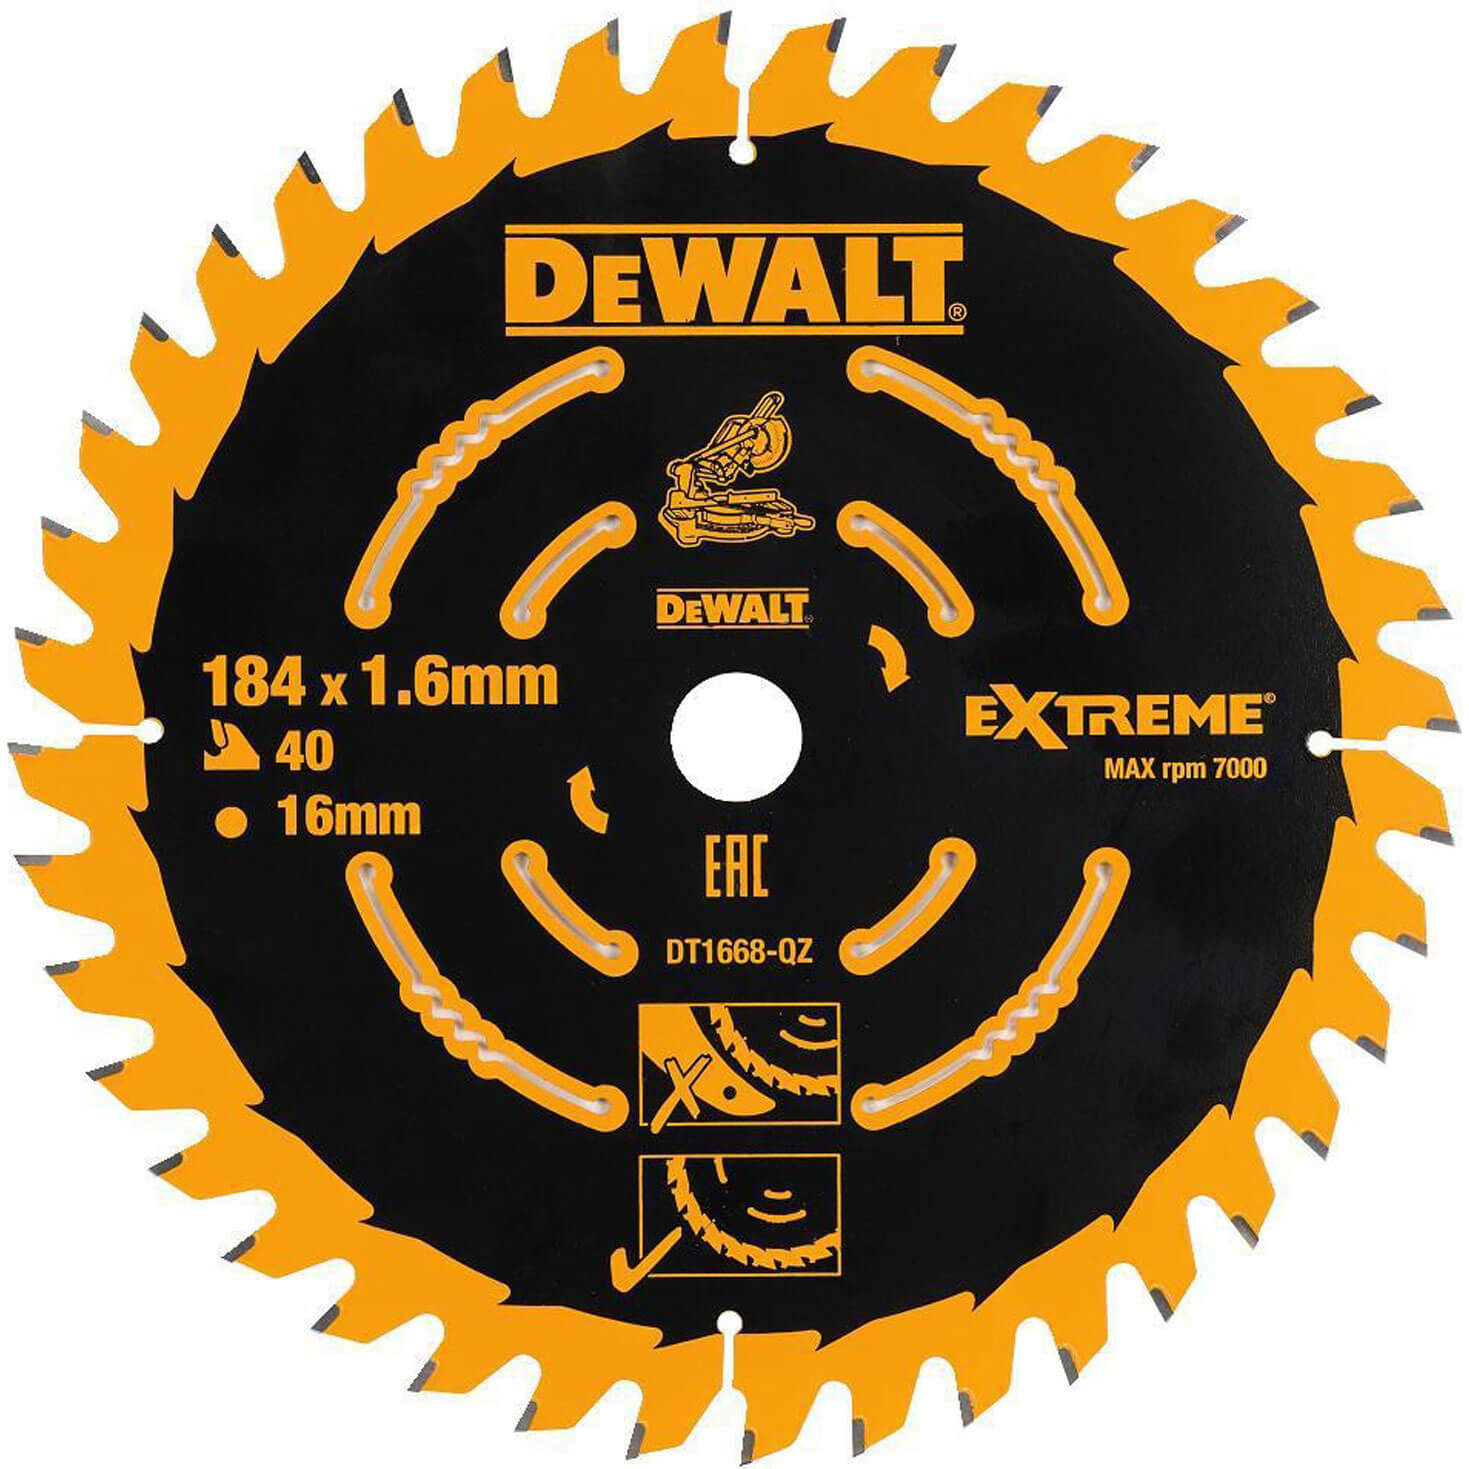 Image of DeWalt Extreme Cordless Circular Saw Blades 184mm 40T 16mm